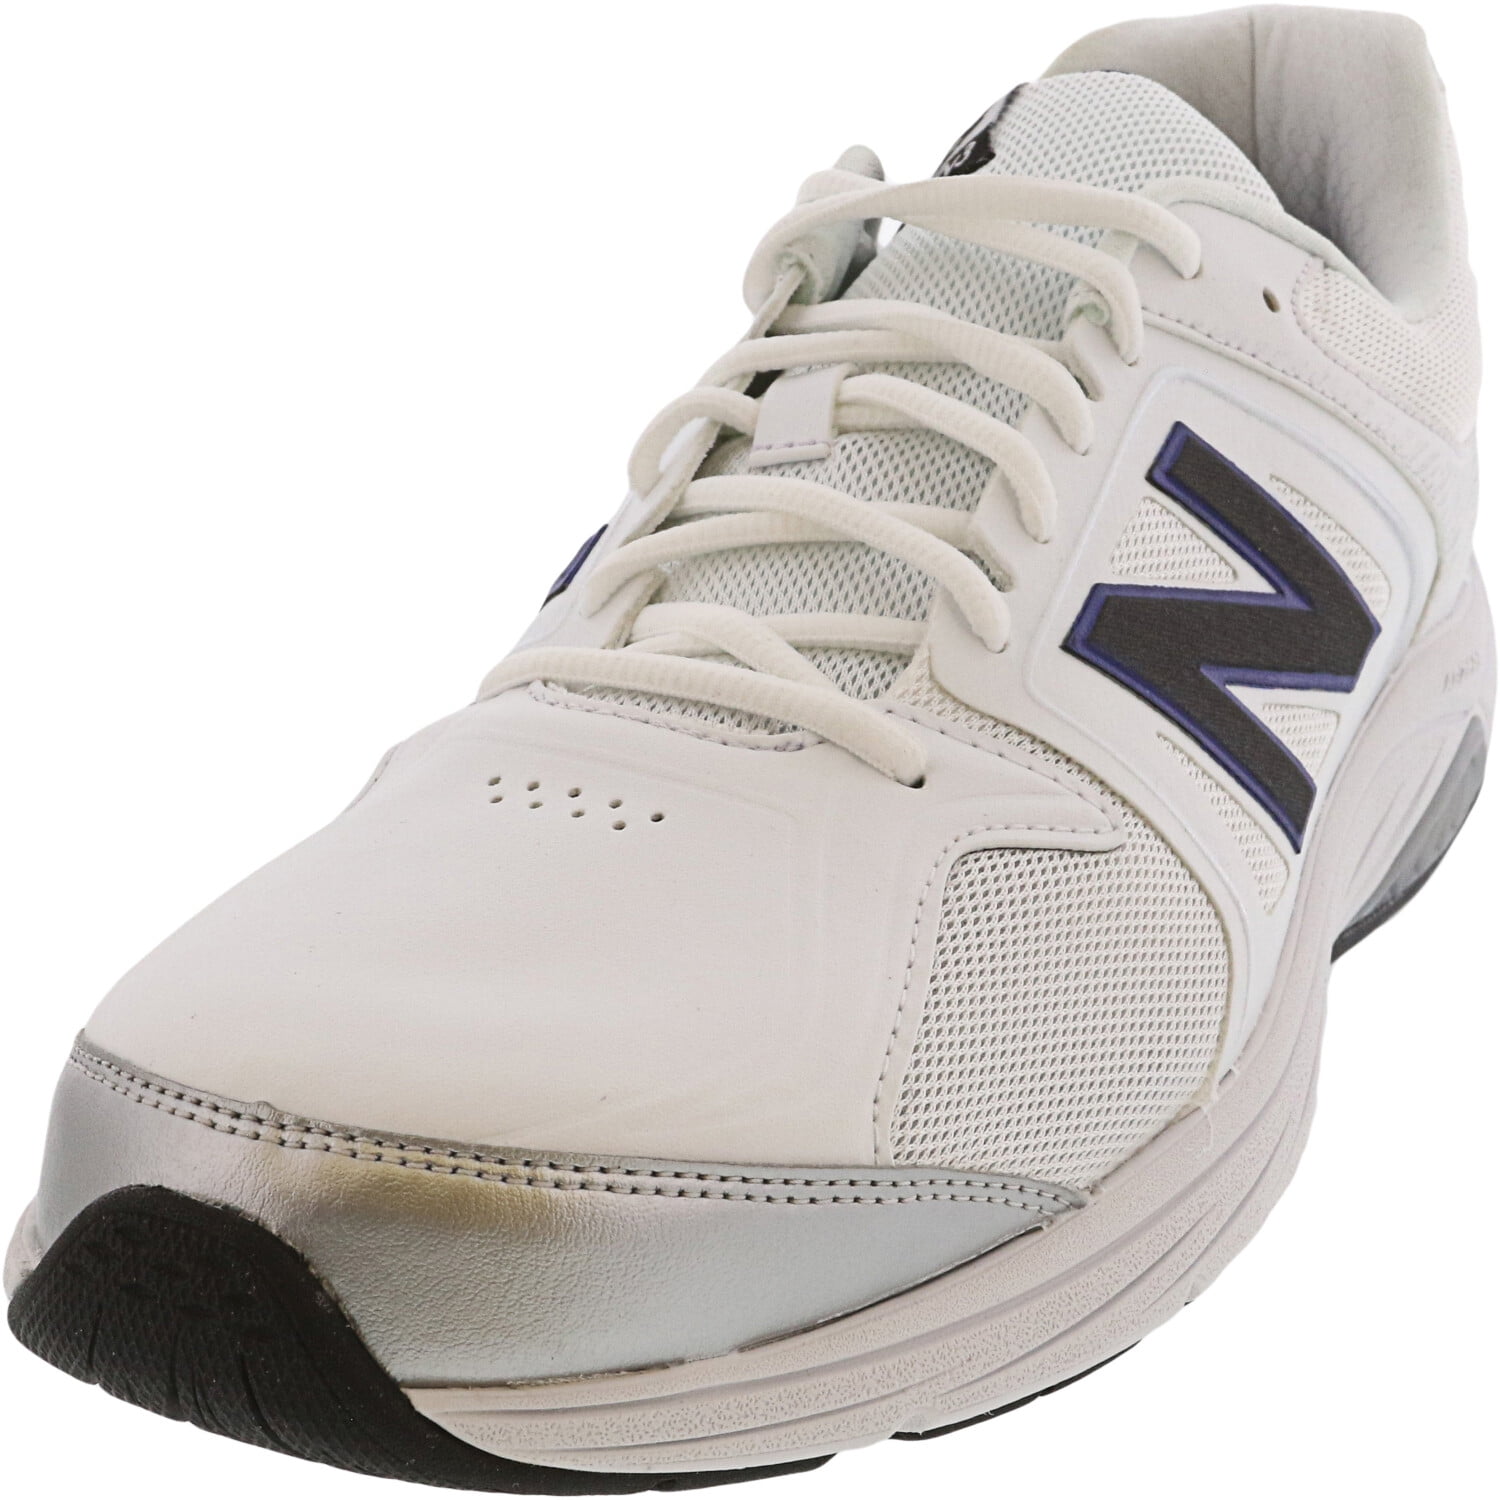 New Balance MW847 Walking Shoe 